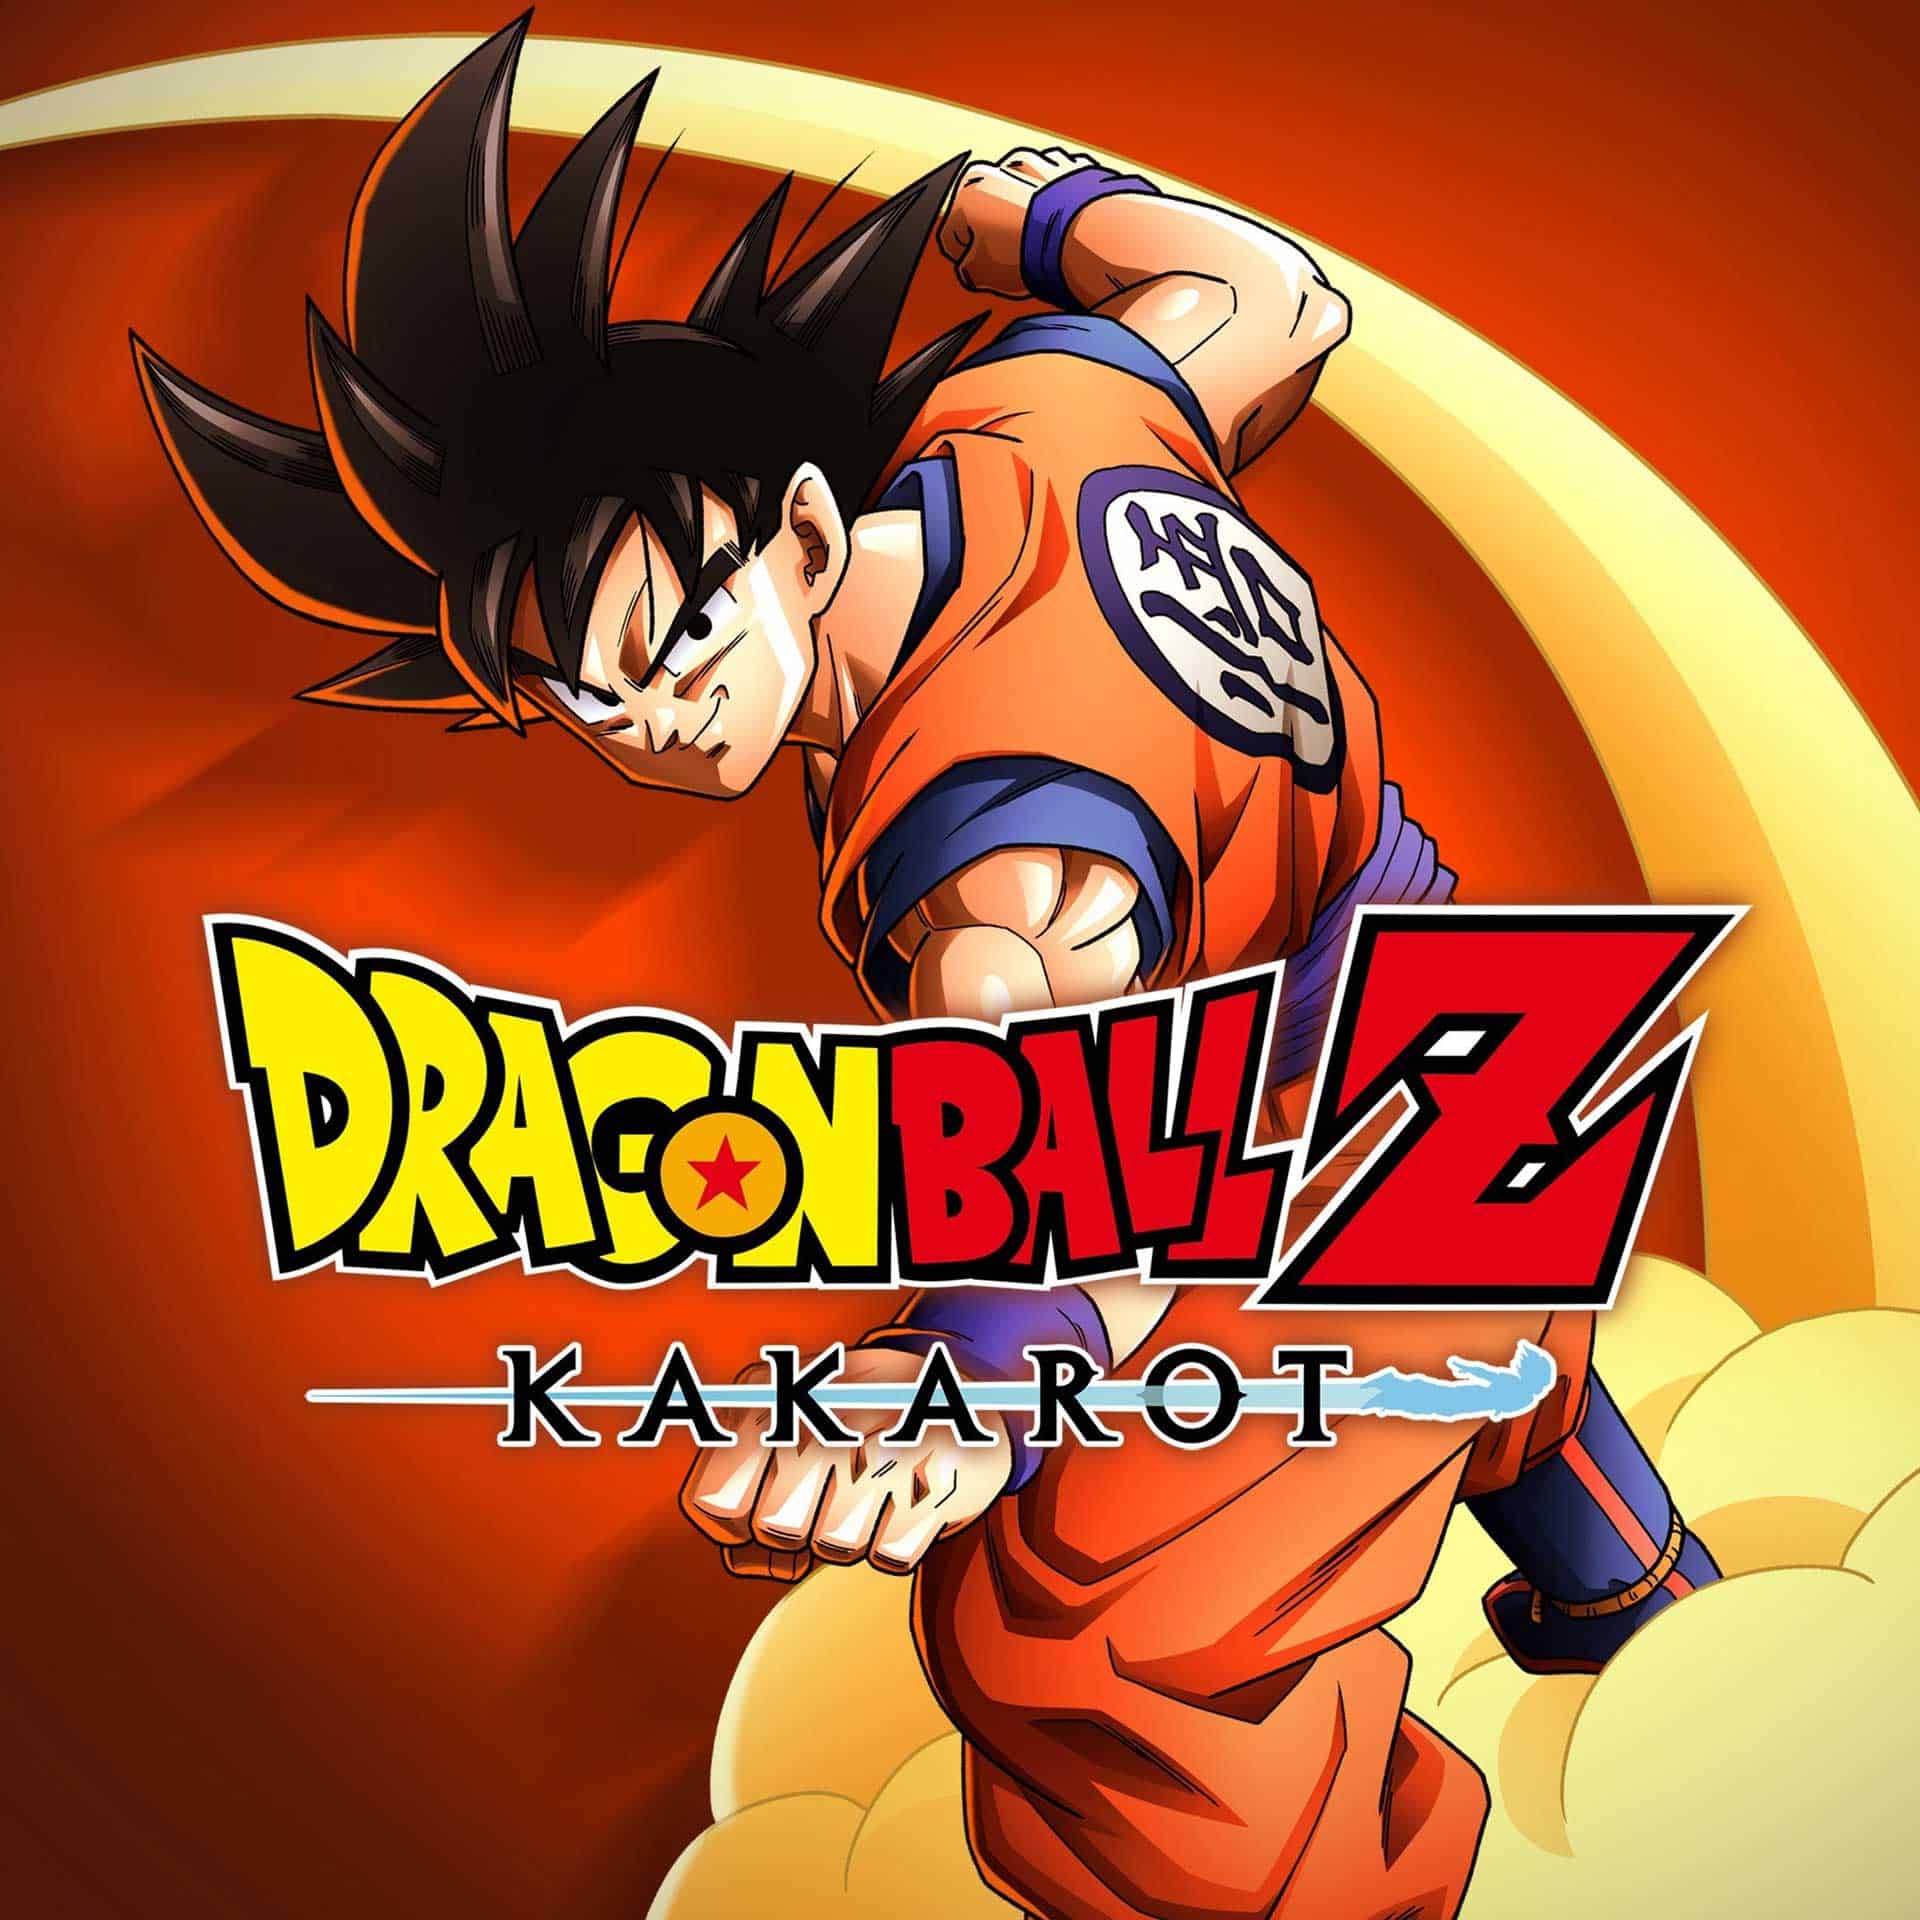 The Dragon Ball Z: Kakarot Day One Update